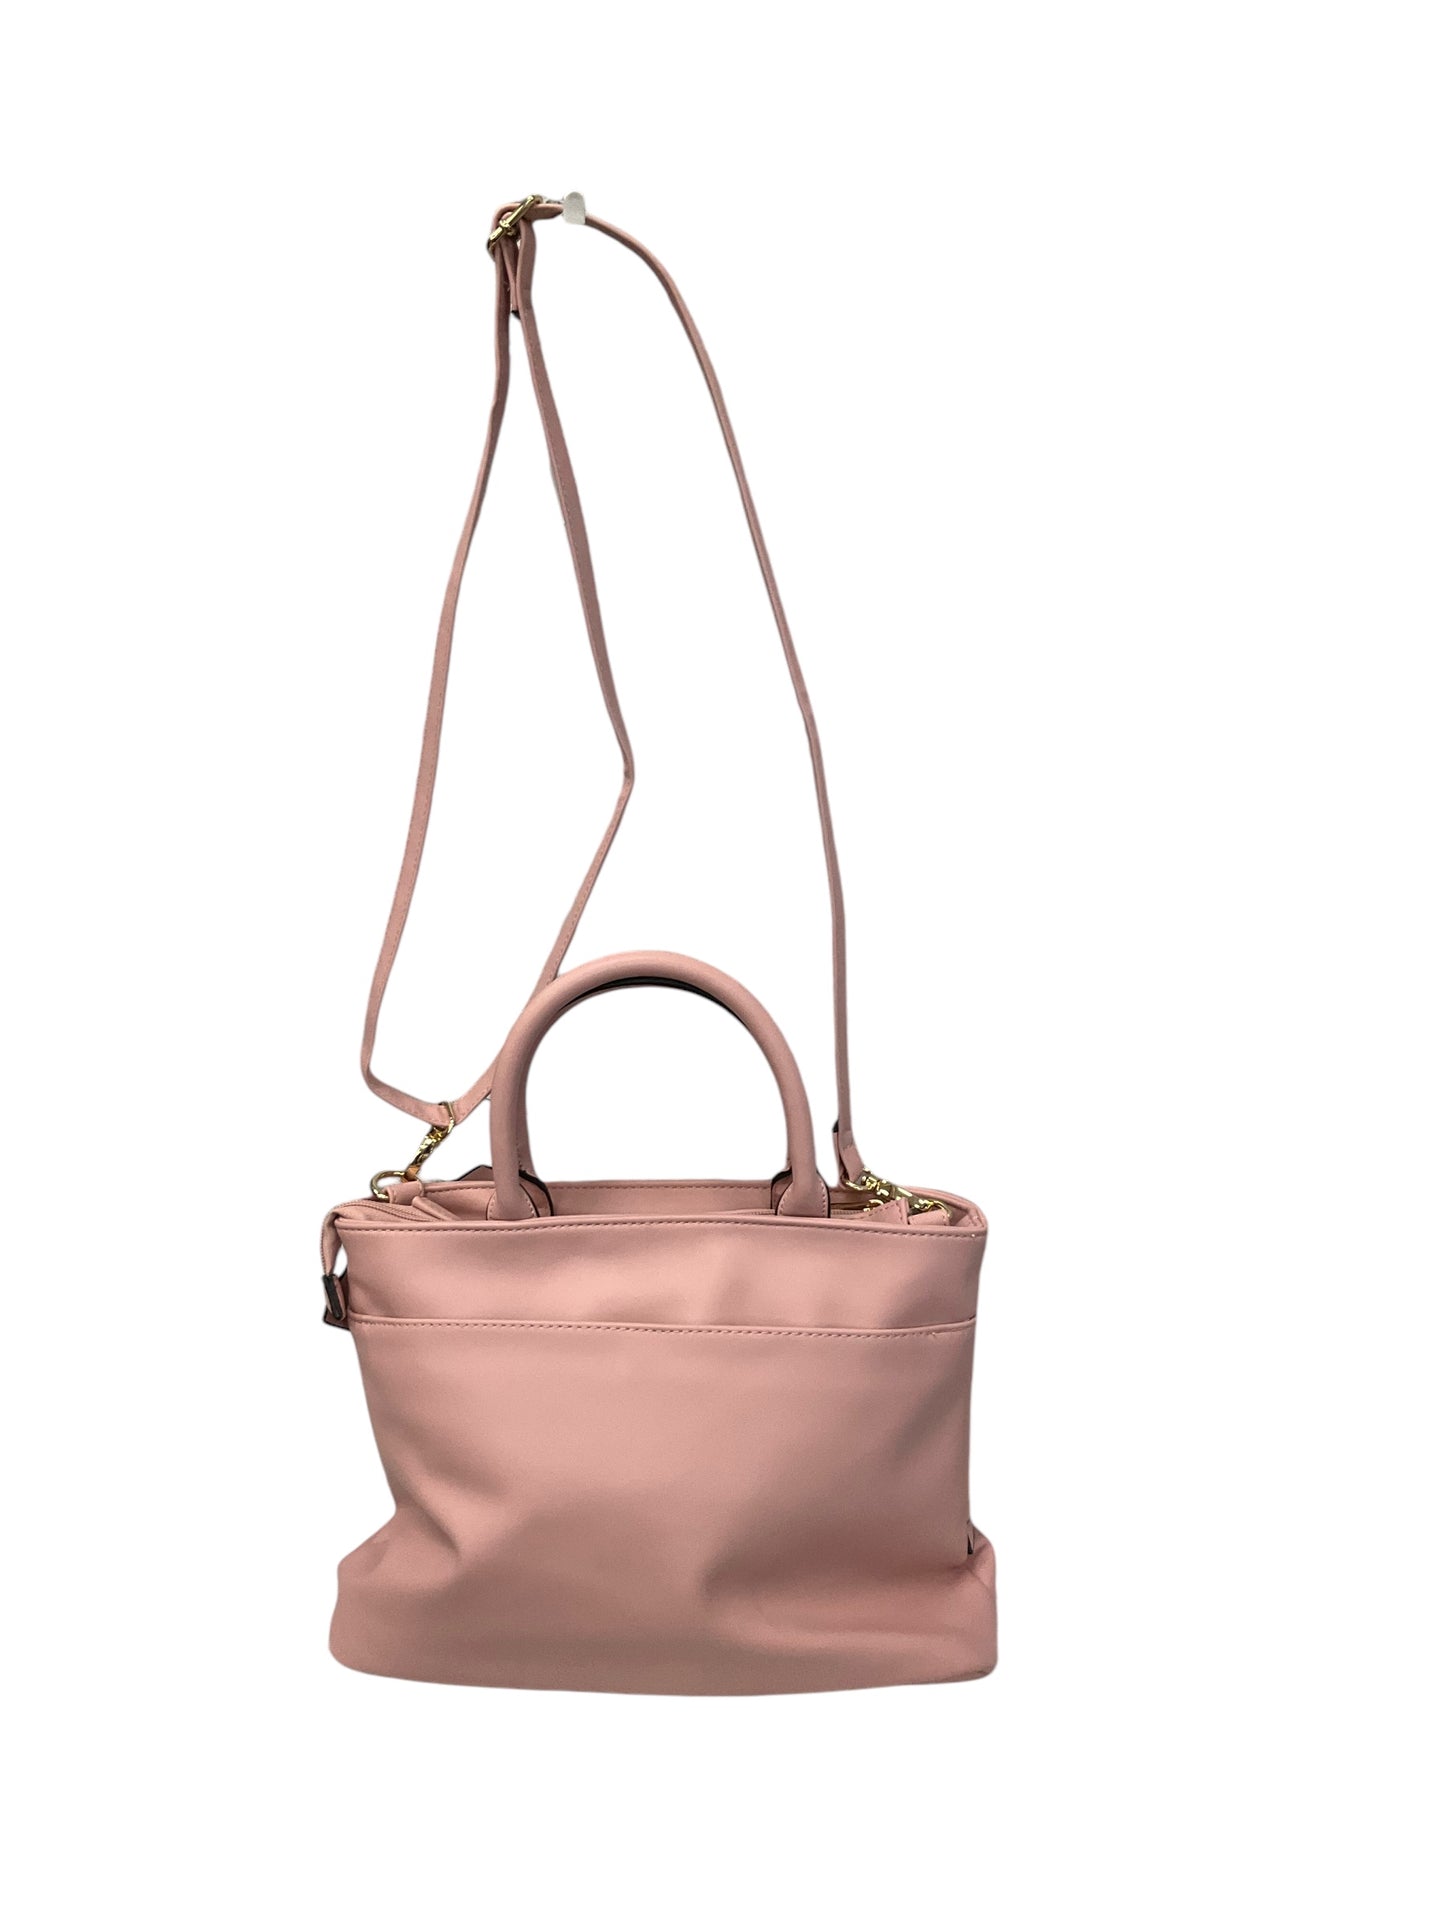 Handbag By Christian Siriano  Size: Medium